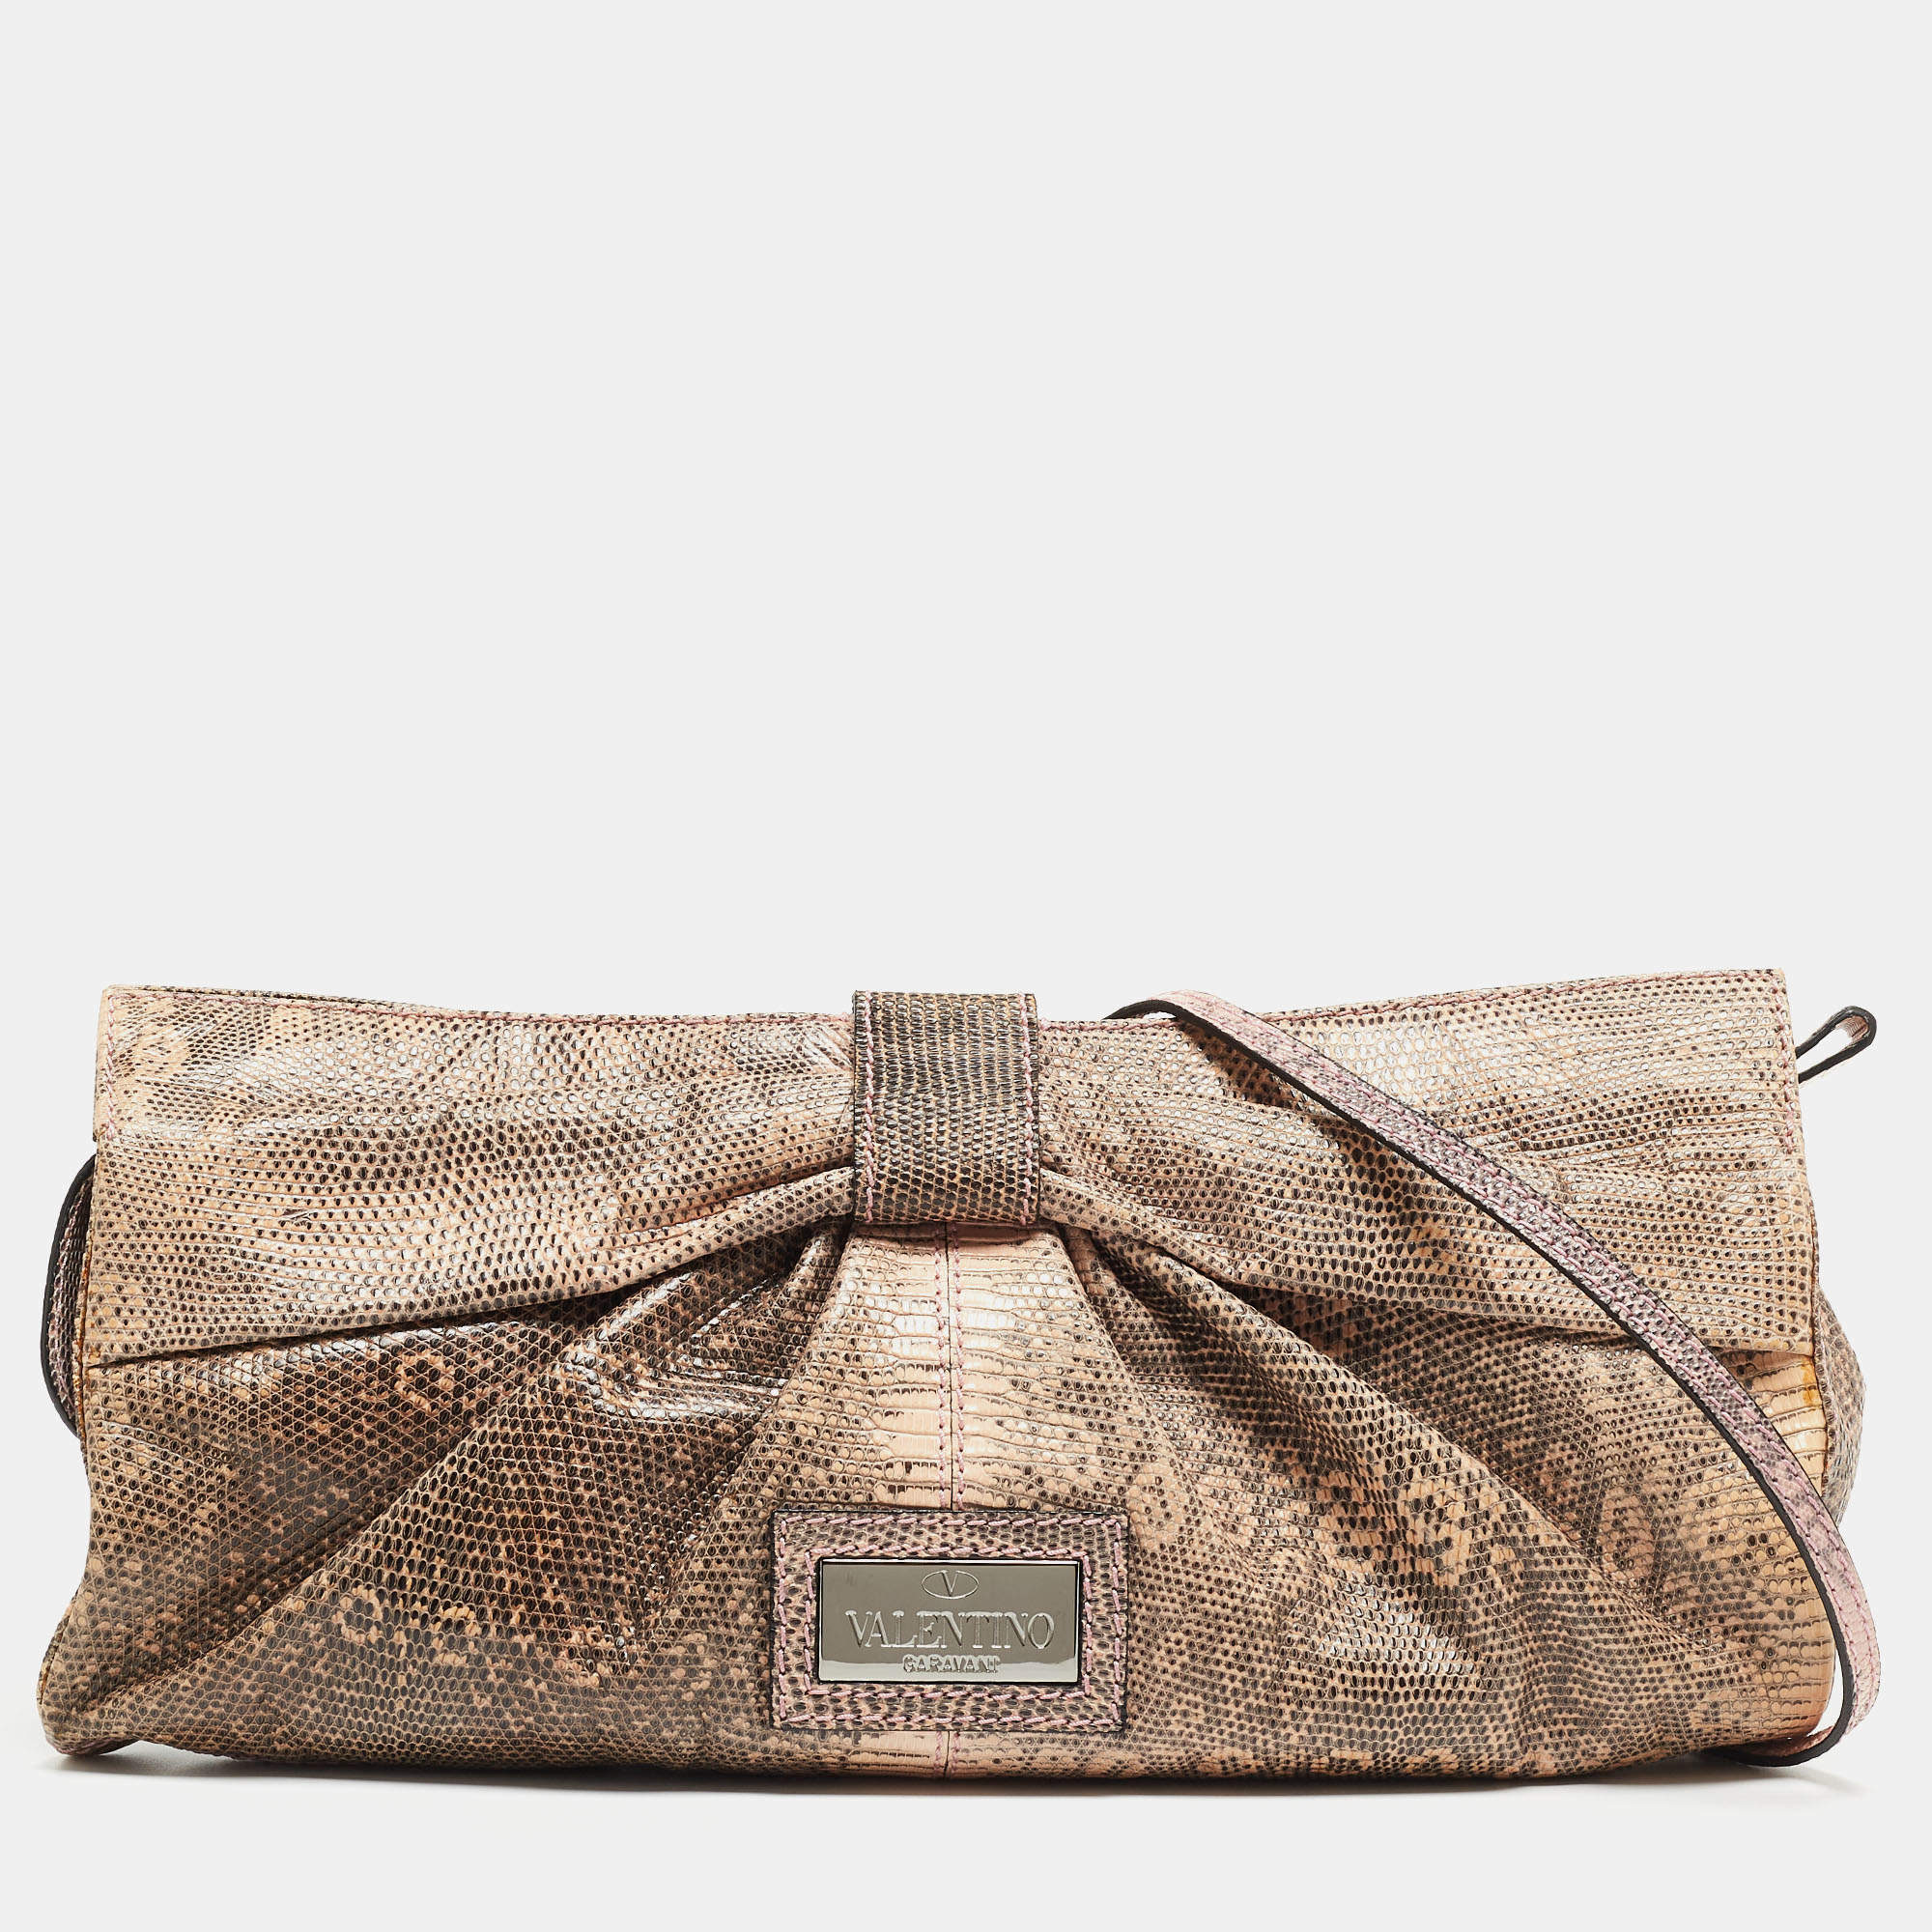 Victoria's Secret Gold Bow Clutch Purse Handbag | eBay